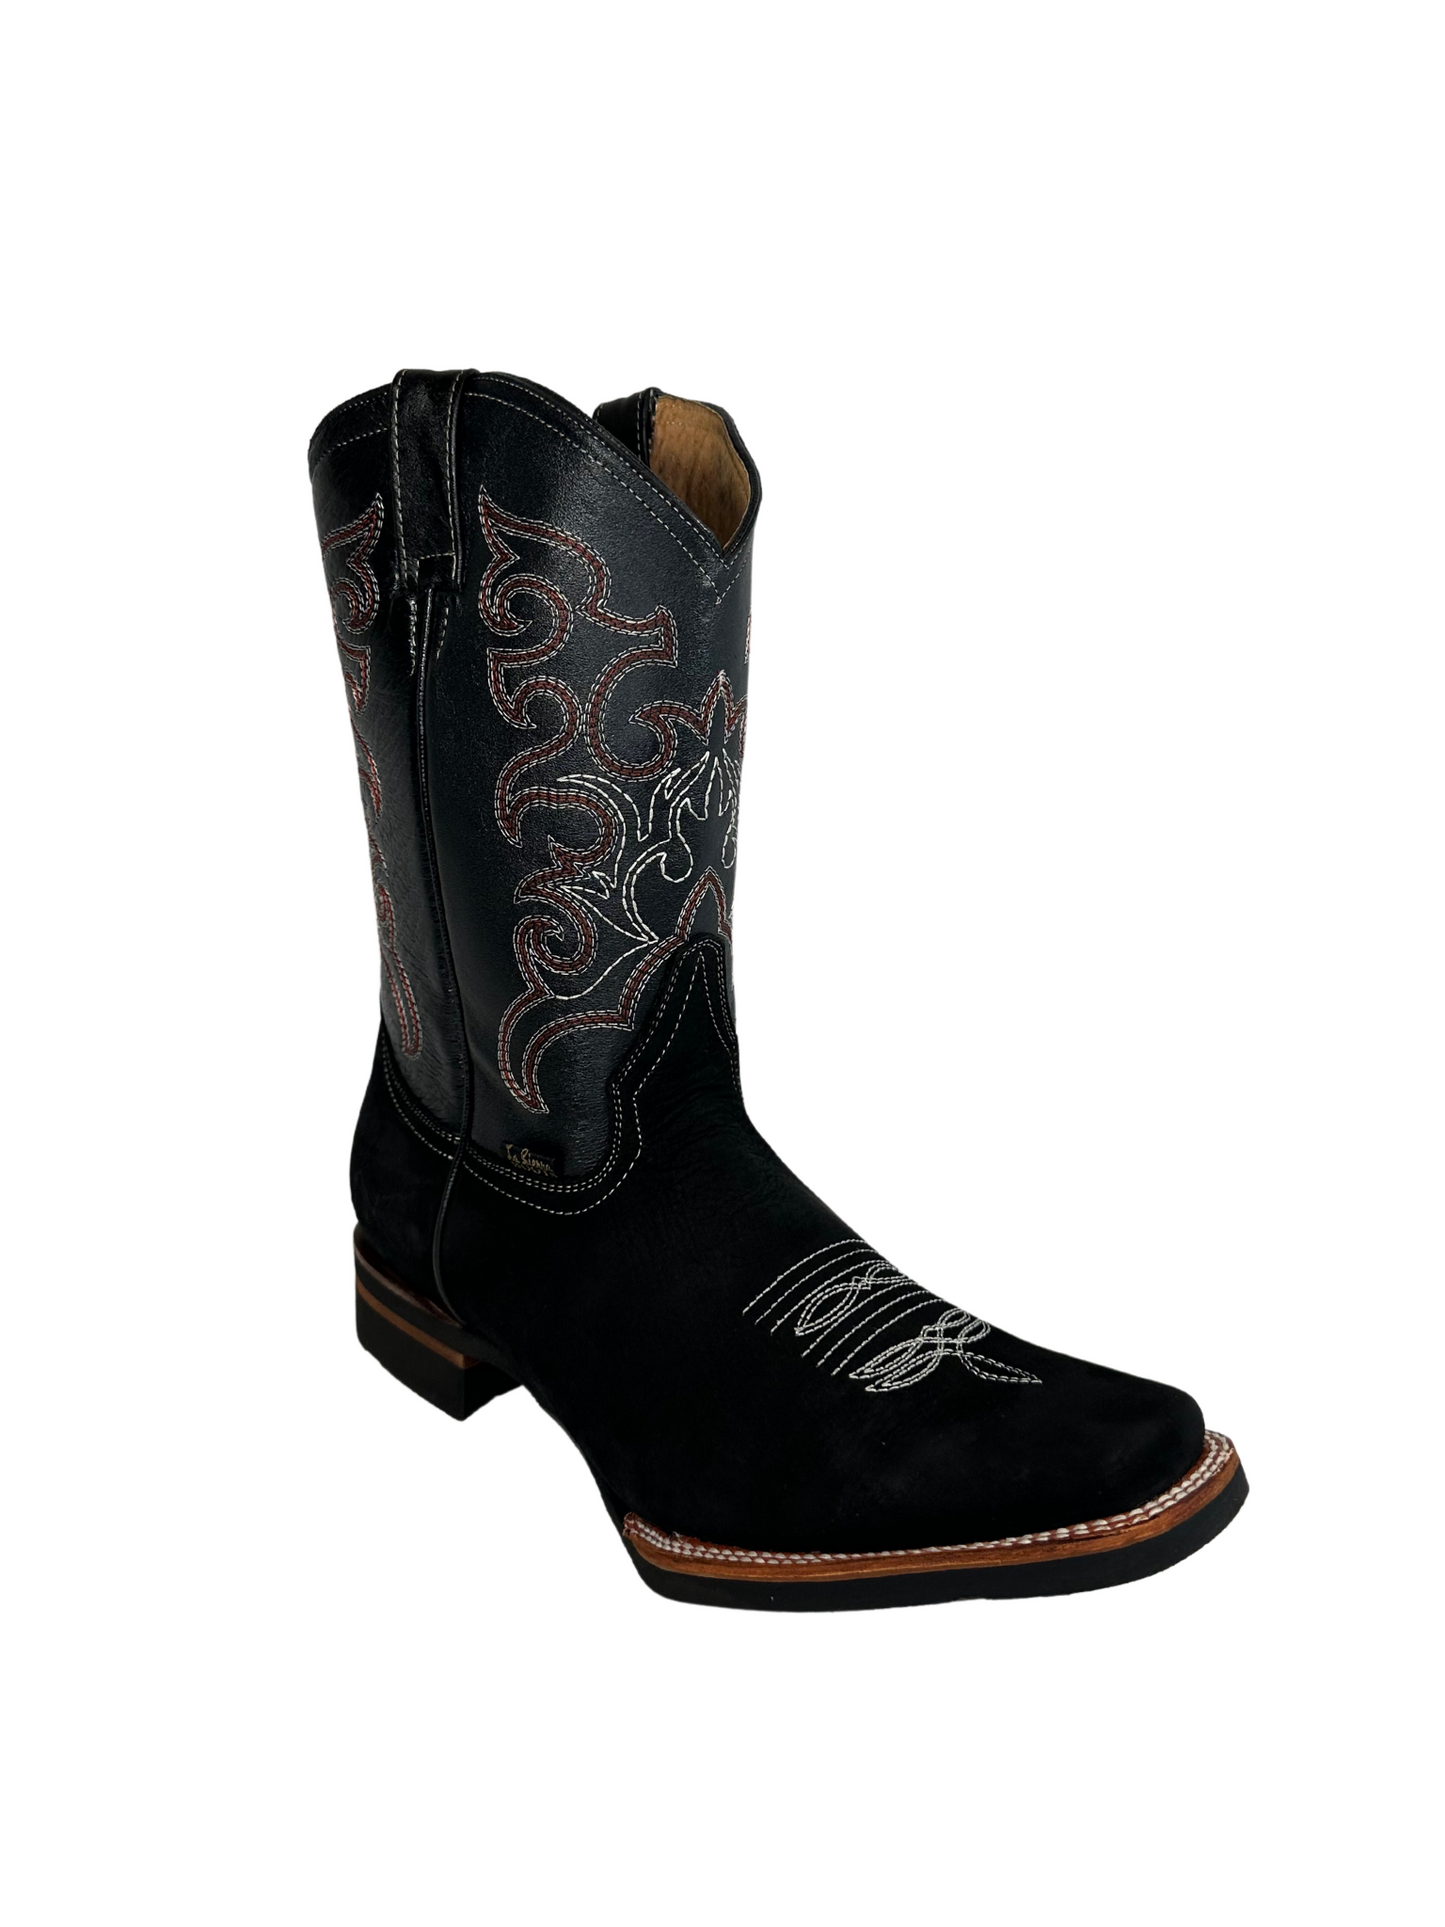 La Sierra Men's Black Nobuck Rodeo Toe Boot